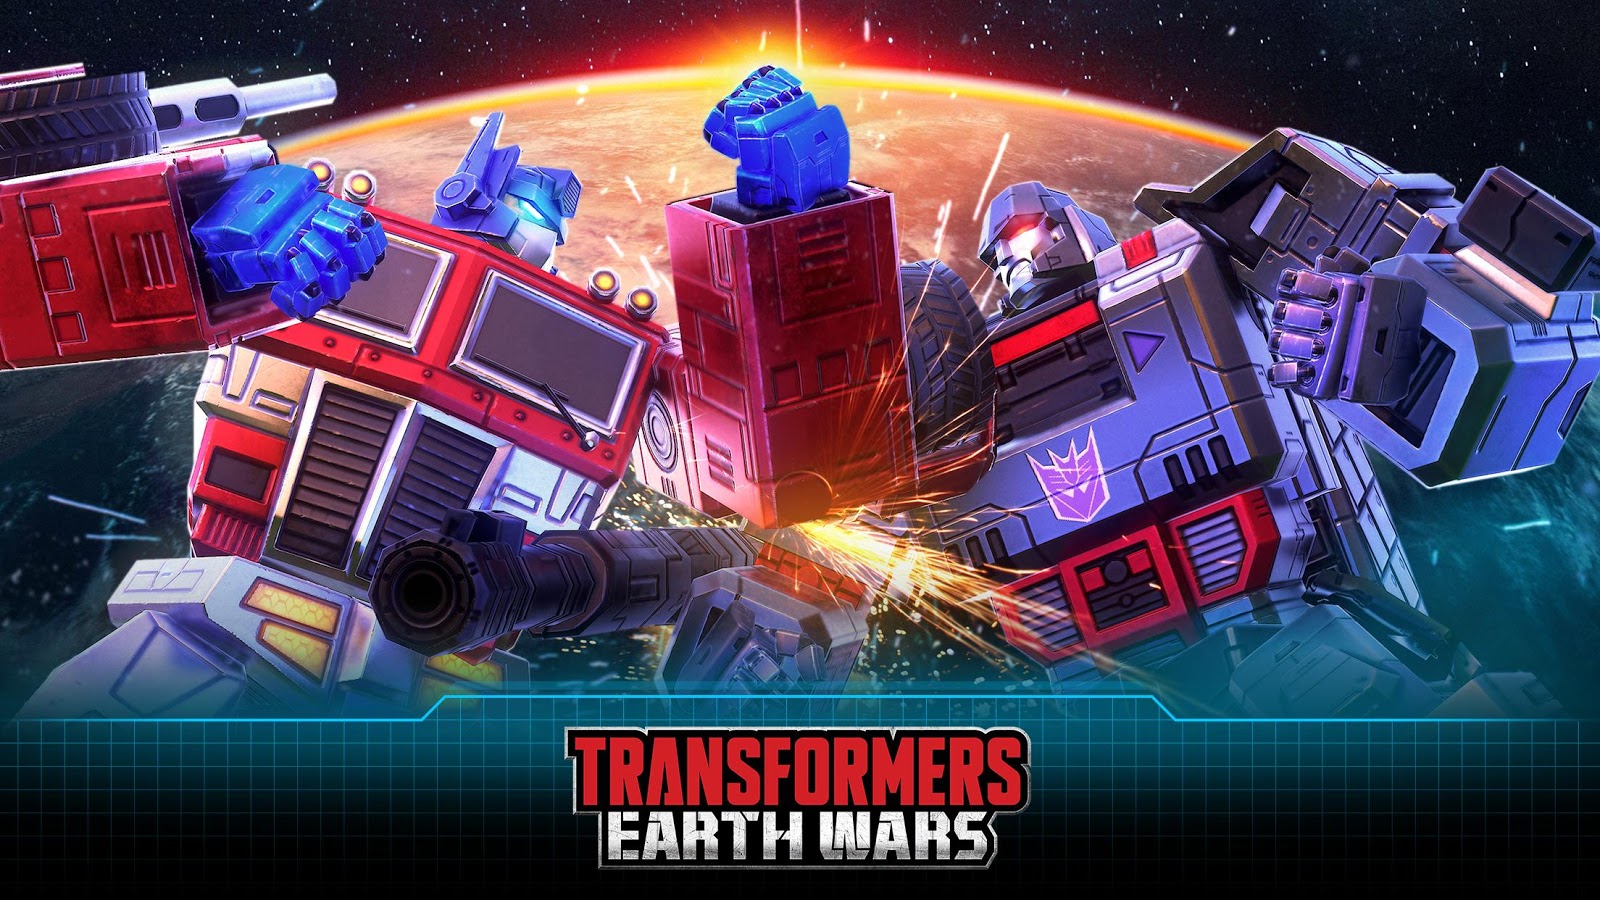 Optimus Prime - Transformers: Earth Wars